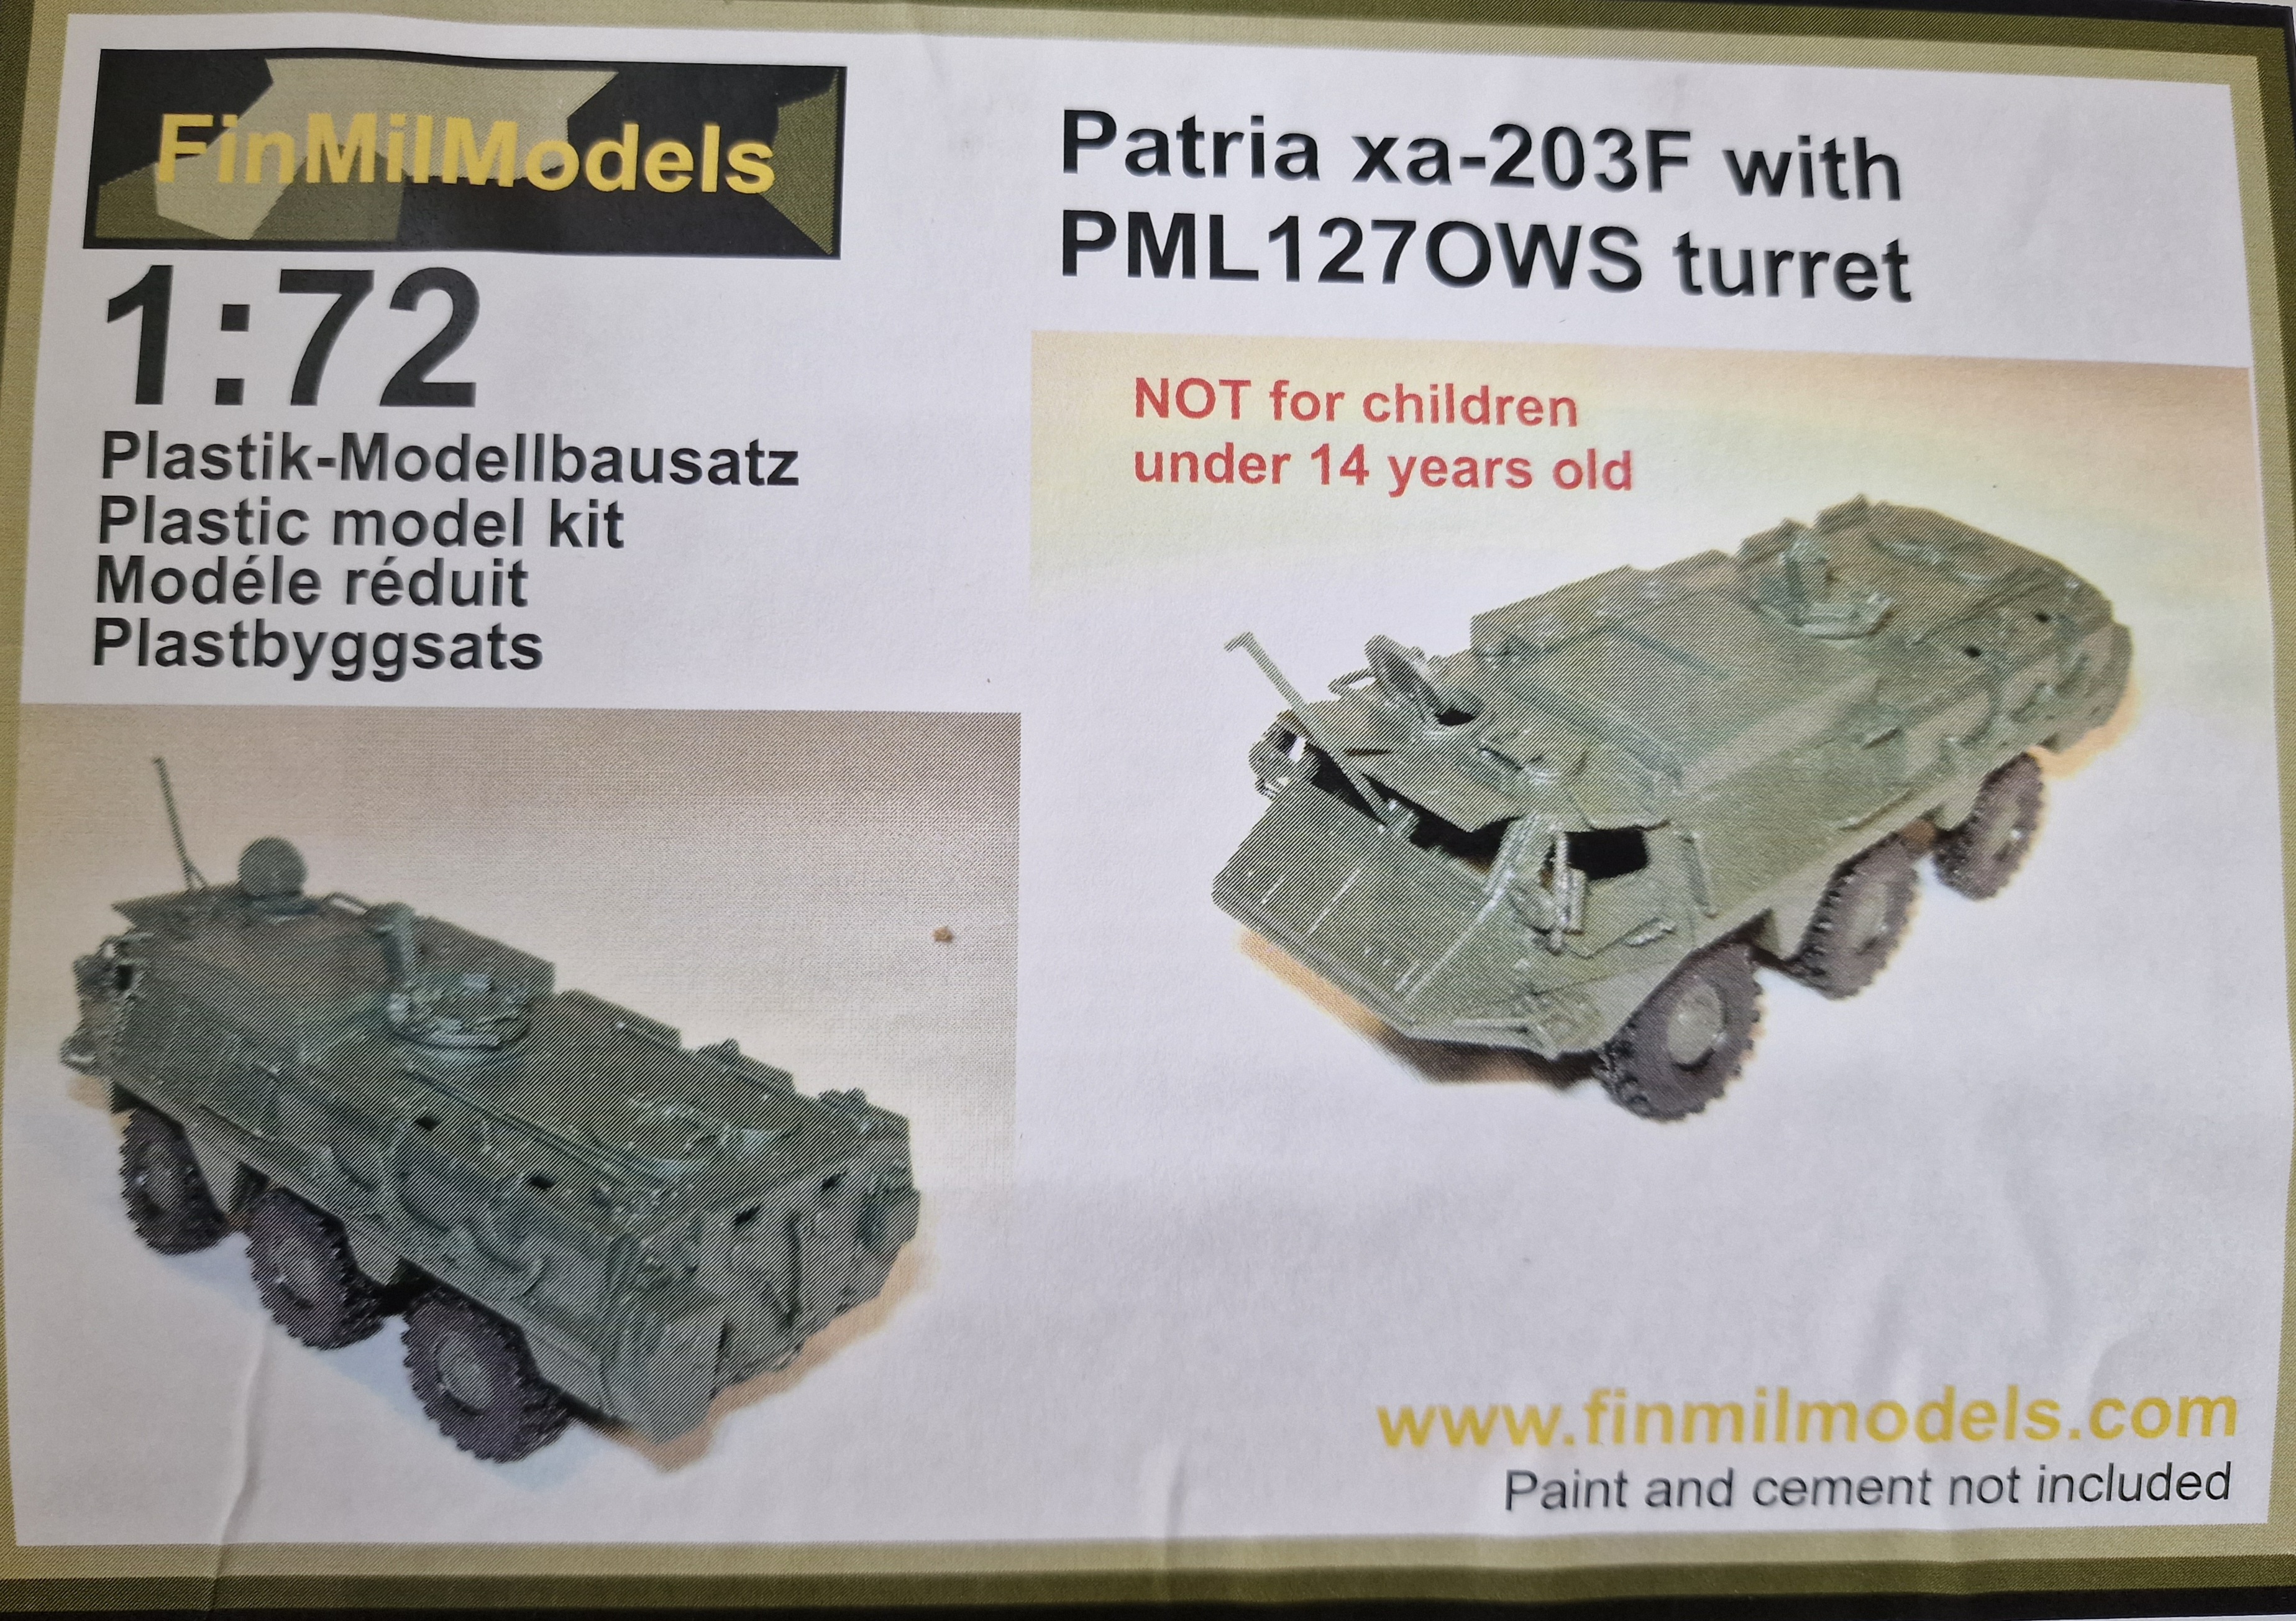 Patria XA-203F with PML127OWS turret